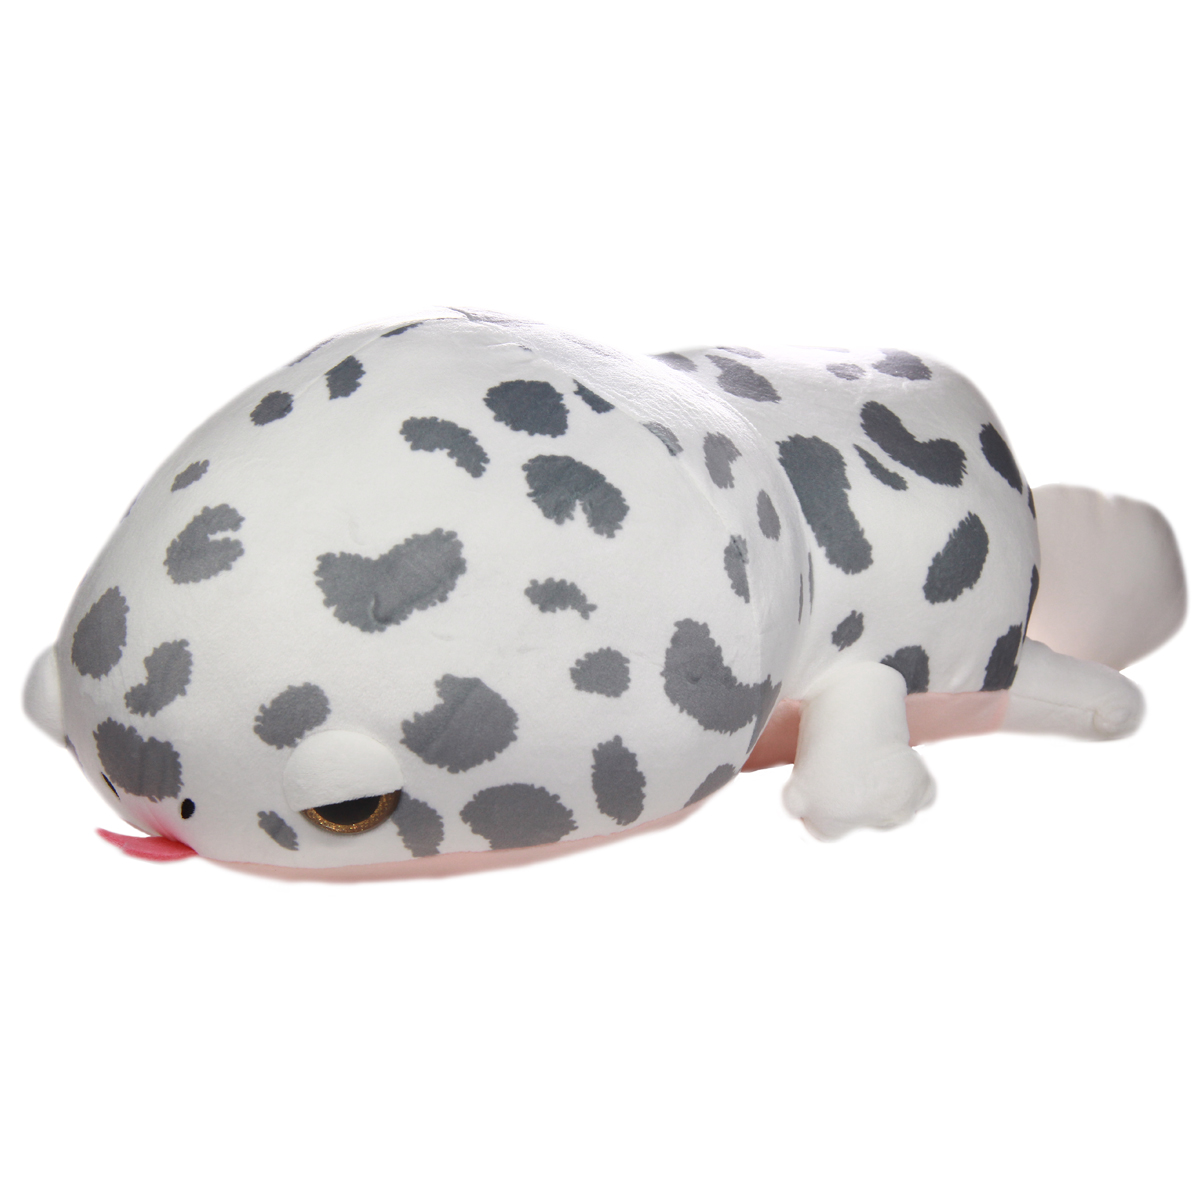 Leopard Gecko Plush Collection Lizard Plush Toy Super Soft Stuffed Animal White Grey Big Size 21 Inches